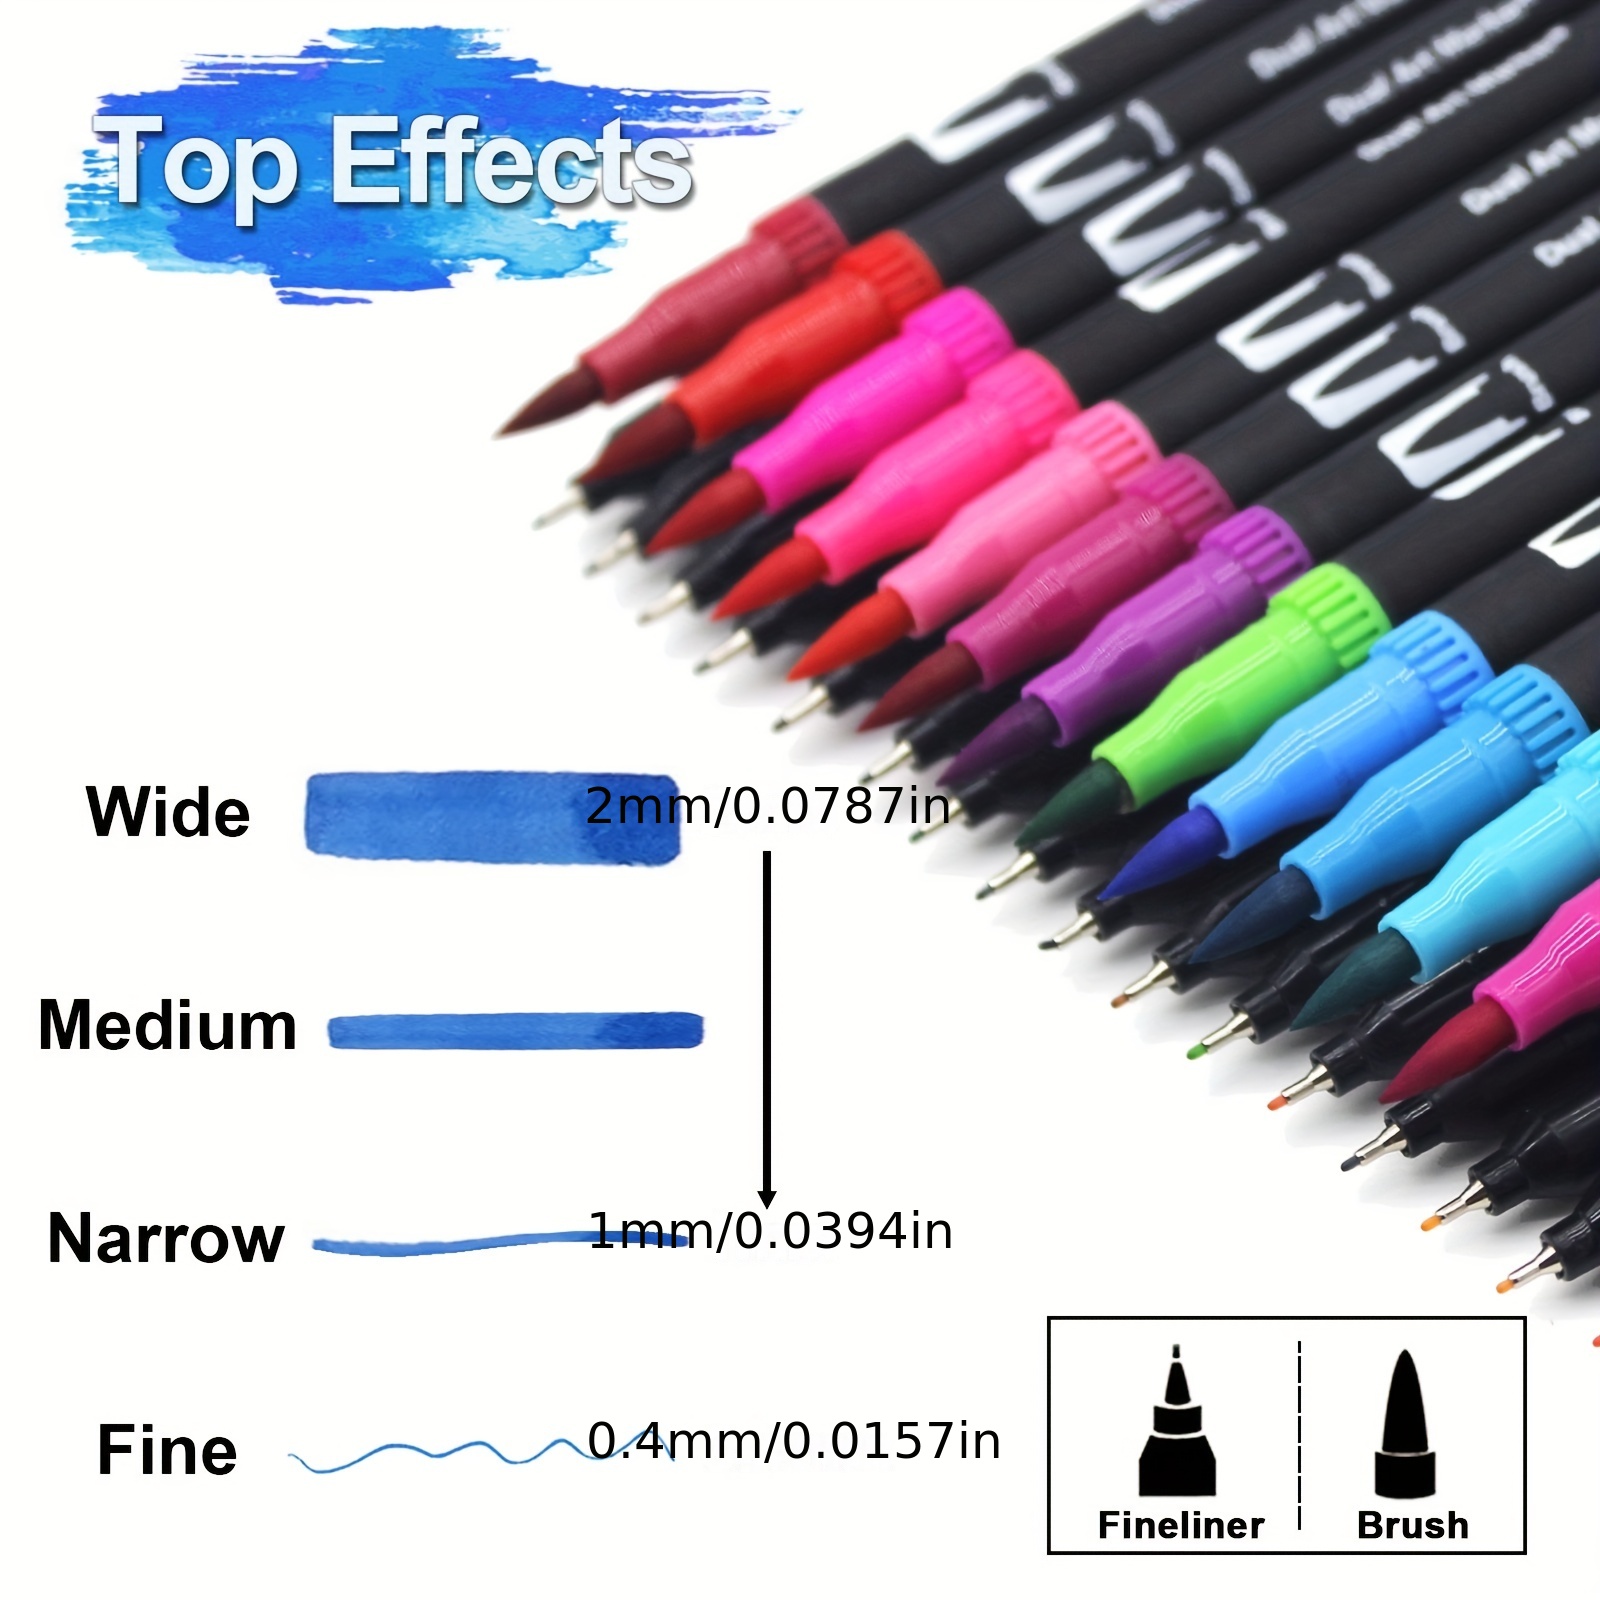 Dual Brush Pens Markers 132 Colors Art Marker Brush Fine Tip Art